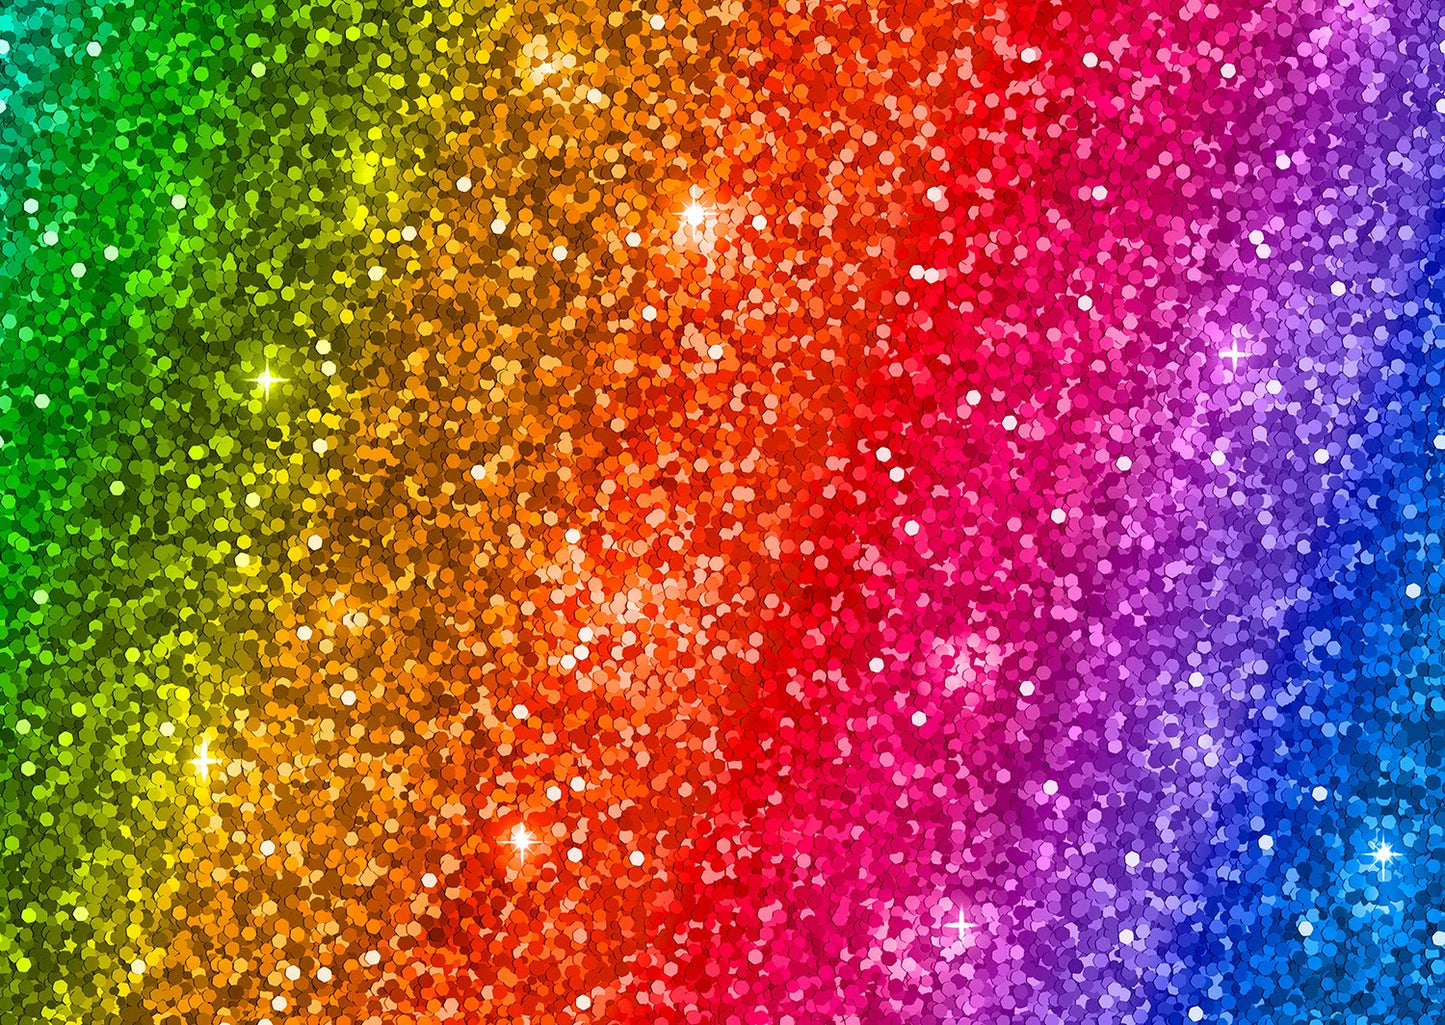 1000 Pieces Jigsaw Puzzle - Rainbow Glitter Gradient (1242)